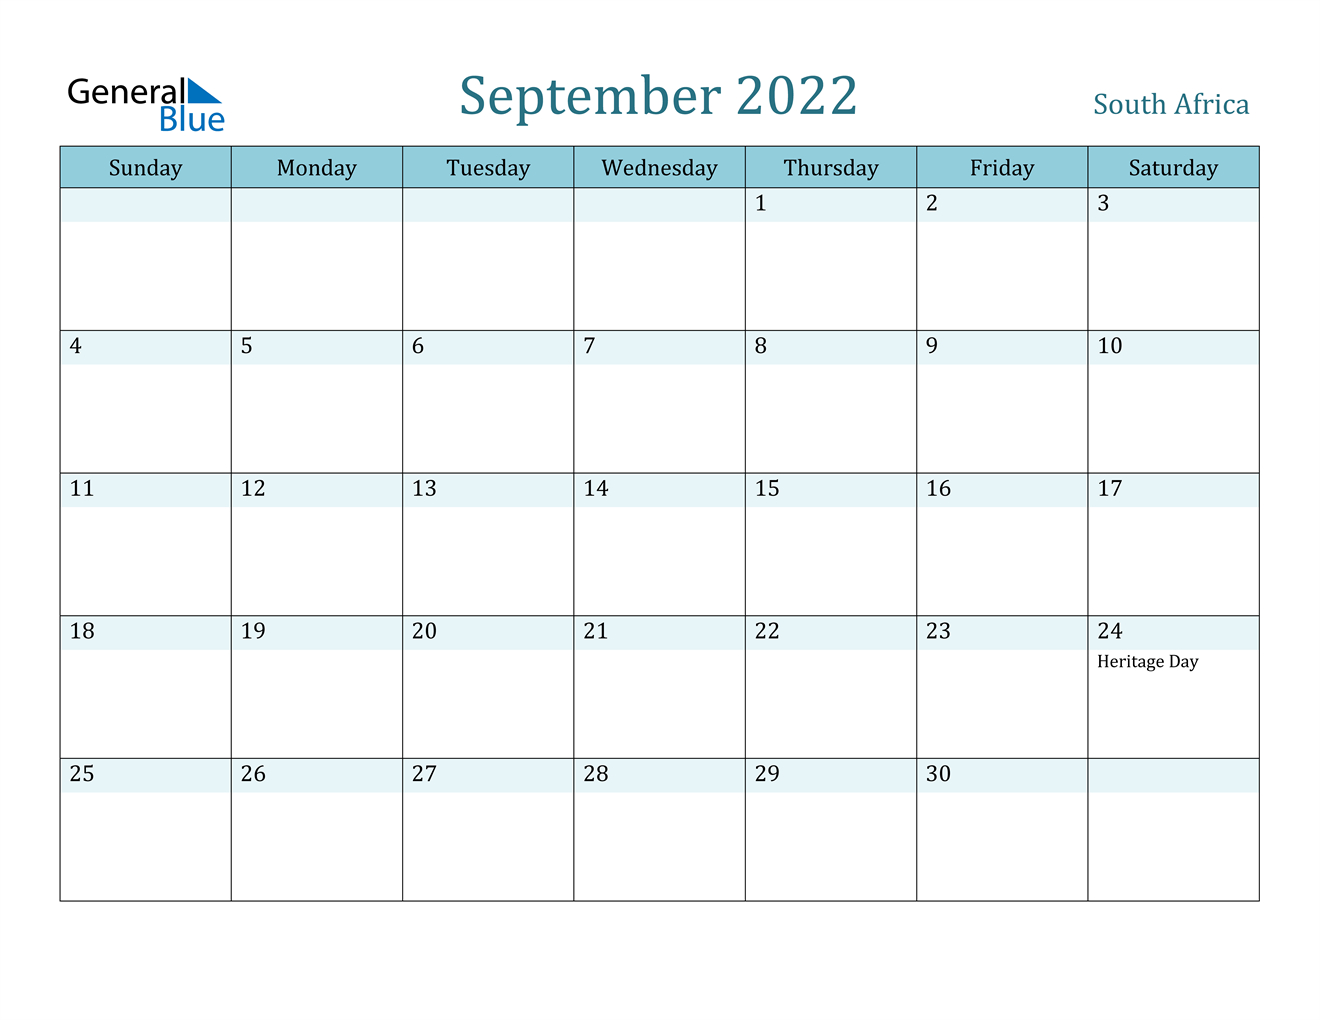 September 2022 Calendar - South Africa